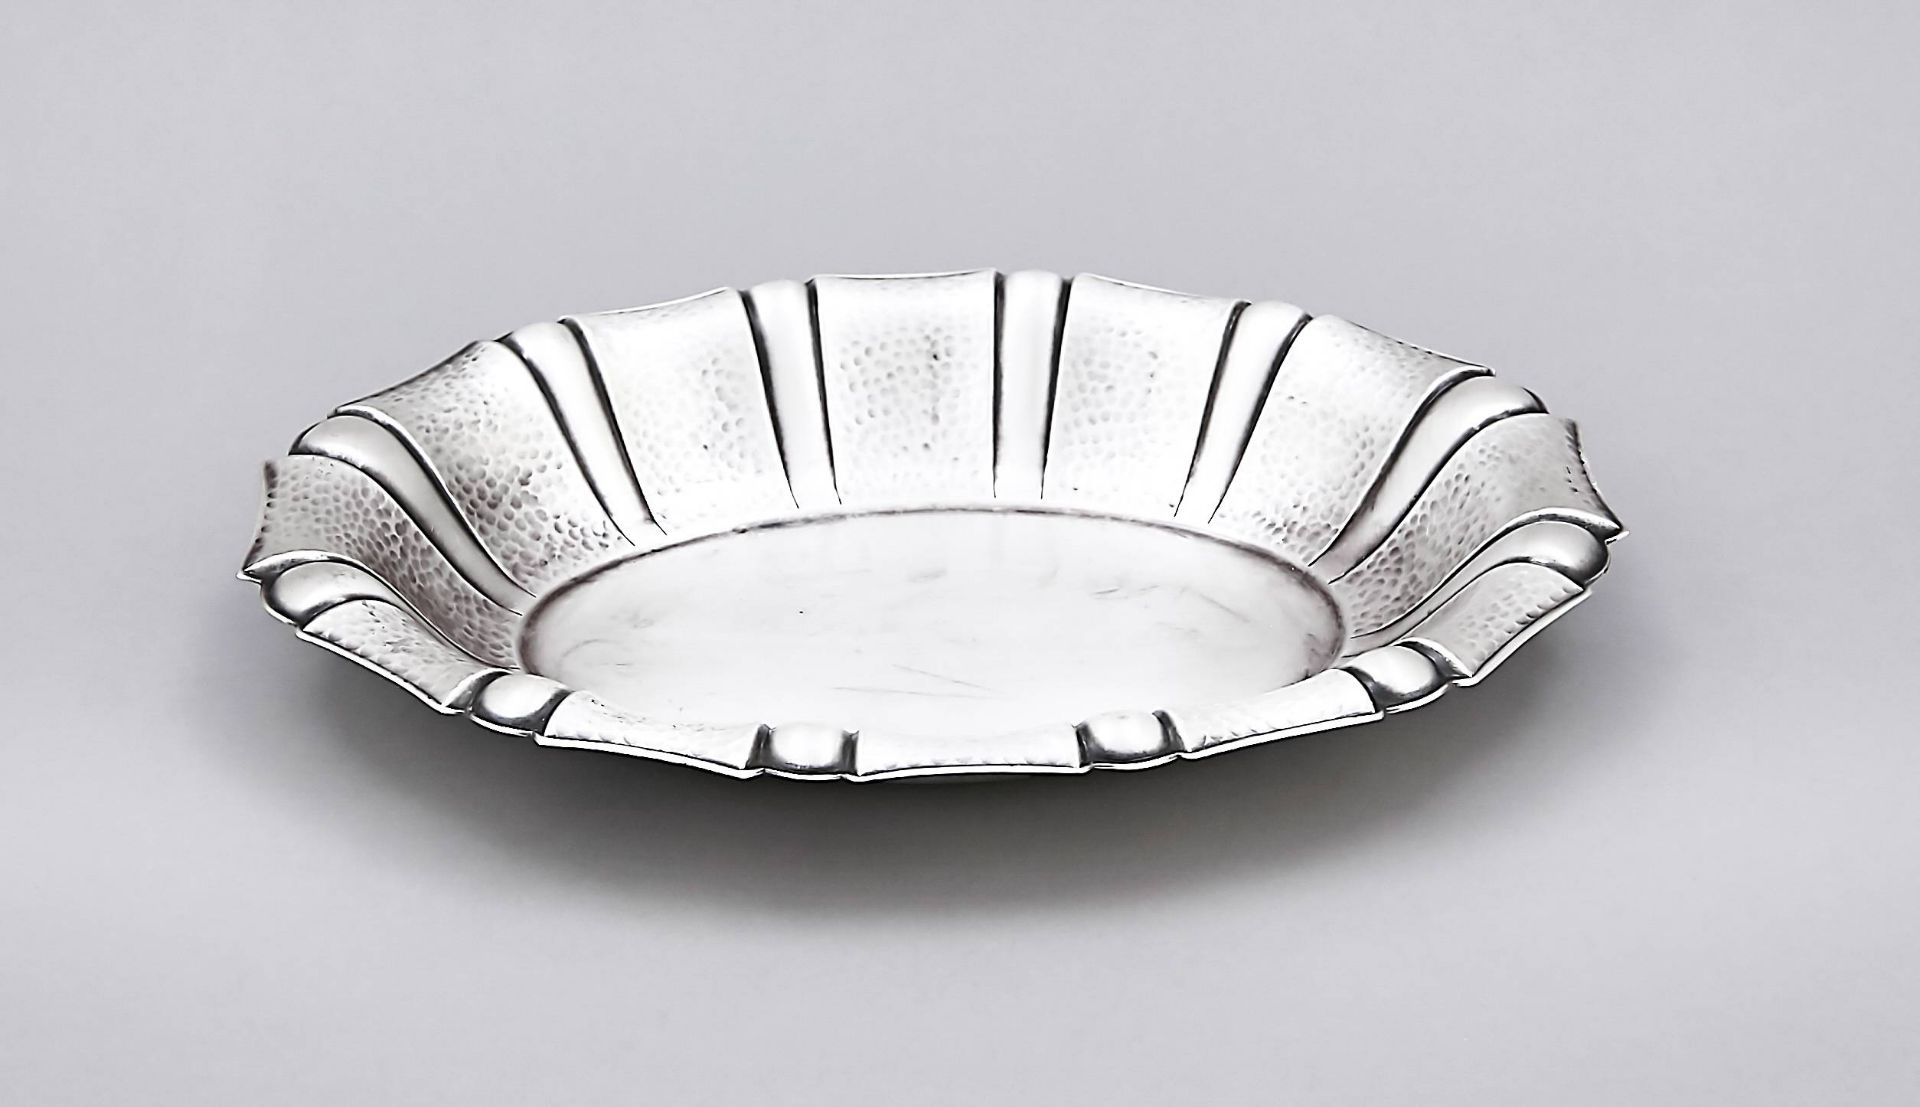 Ovale Art Déco Schale, um 1930, Silber 800/000, glatter Spiegel, passig geschweifter Randmit